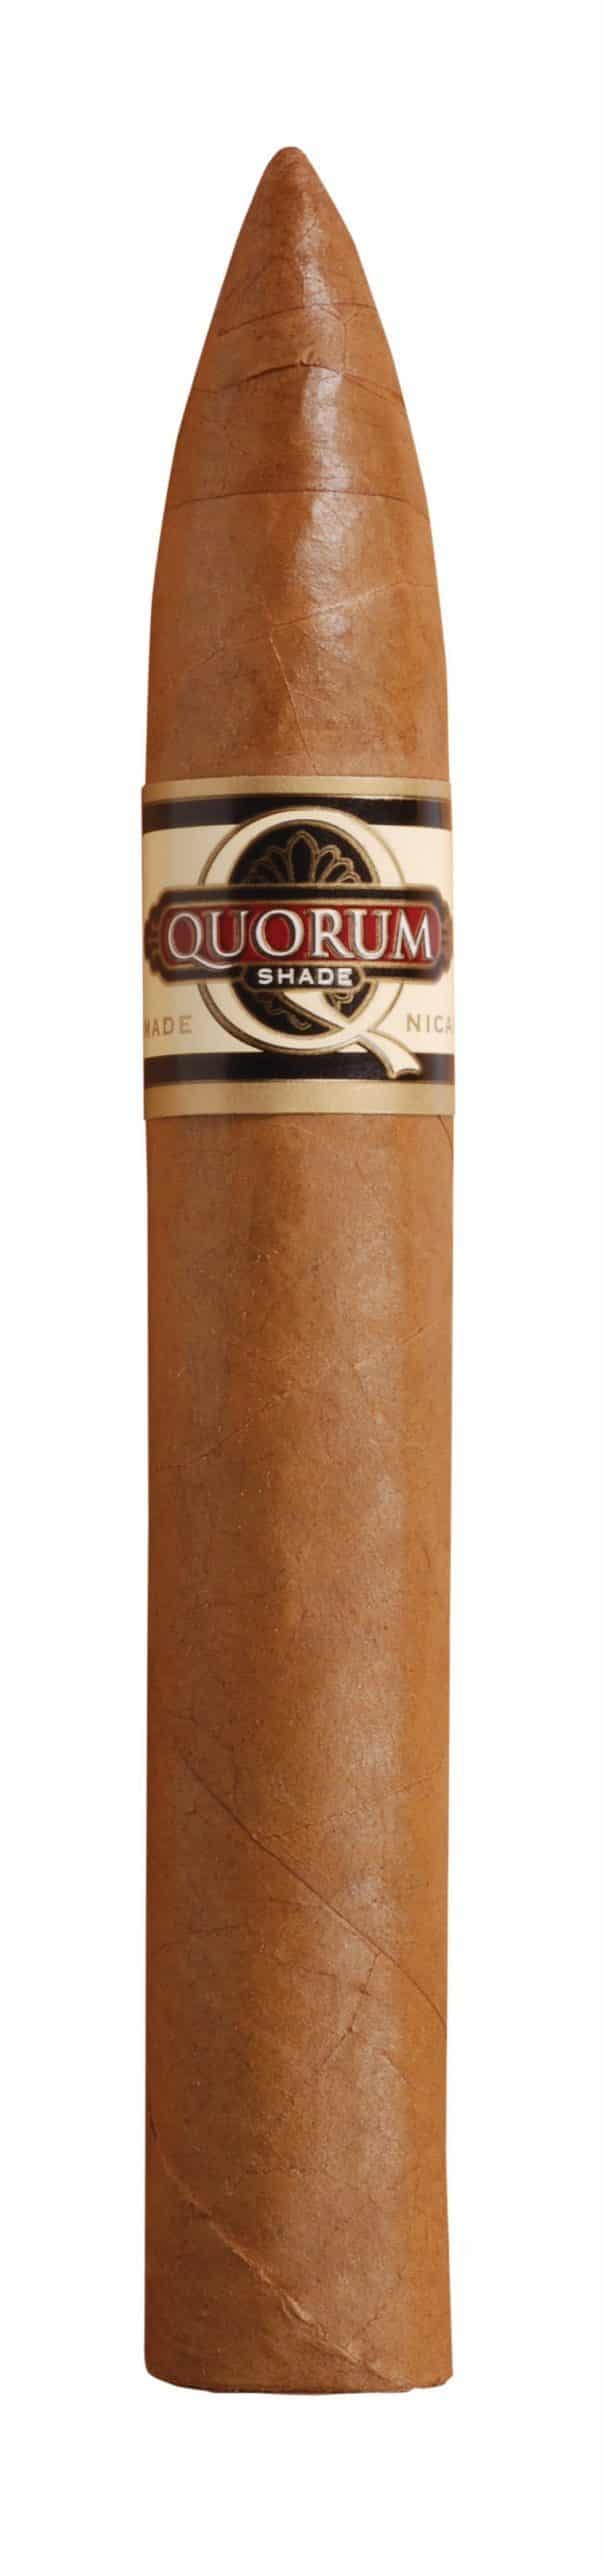 quorum shade torpedo single cigar